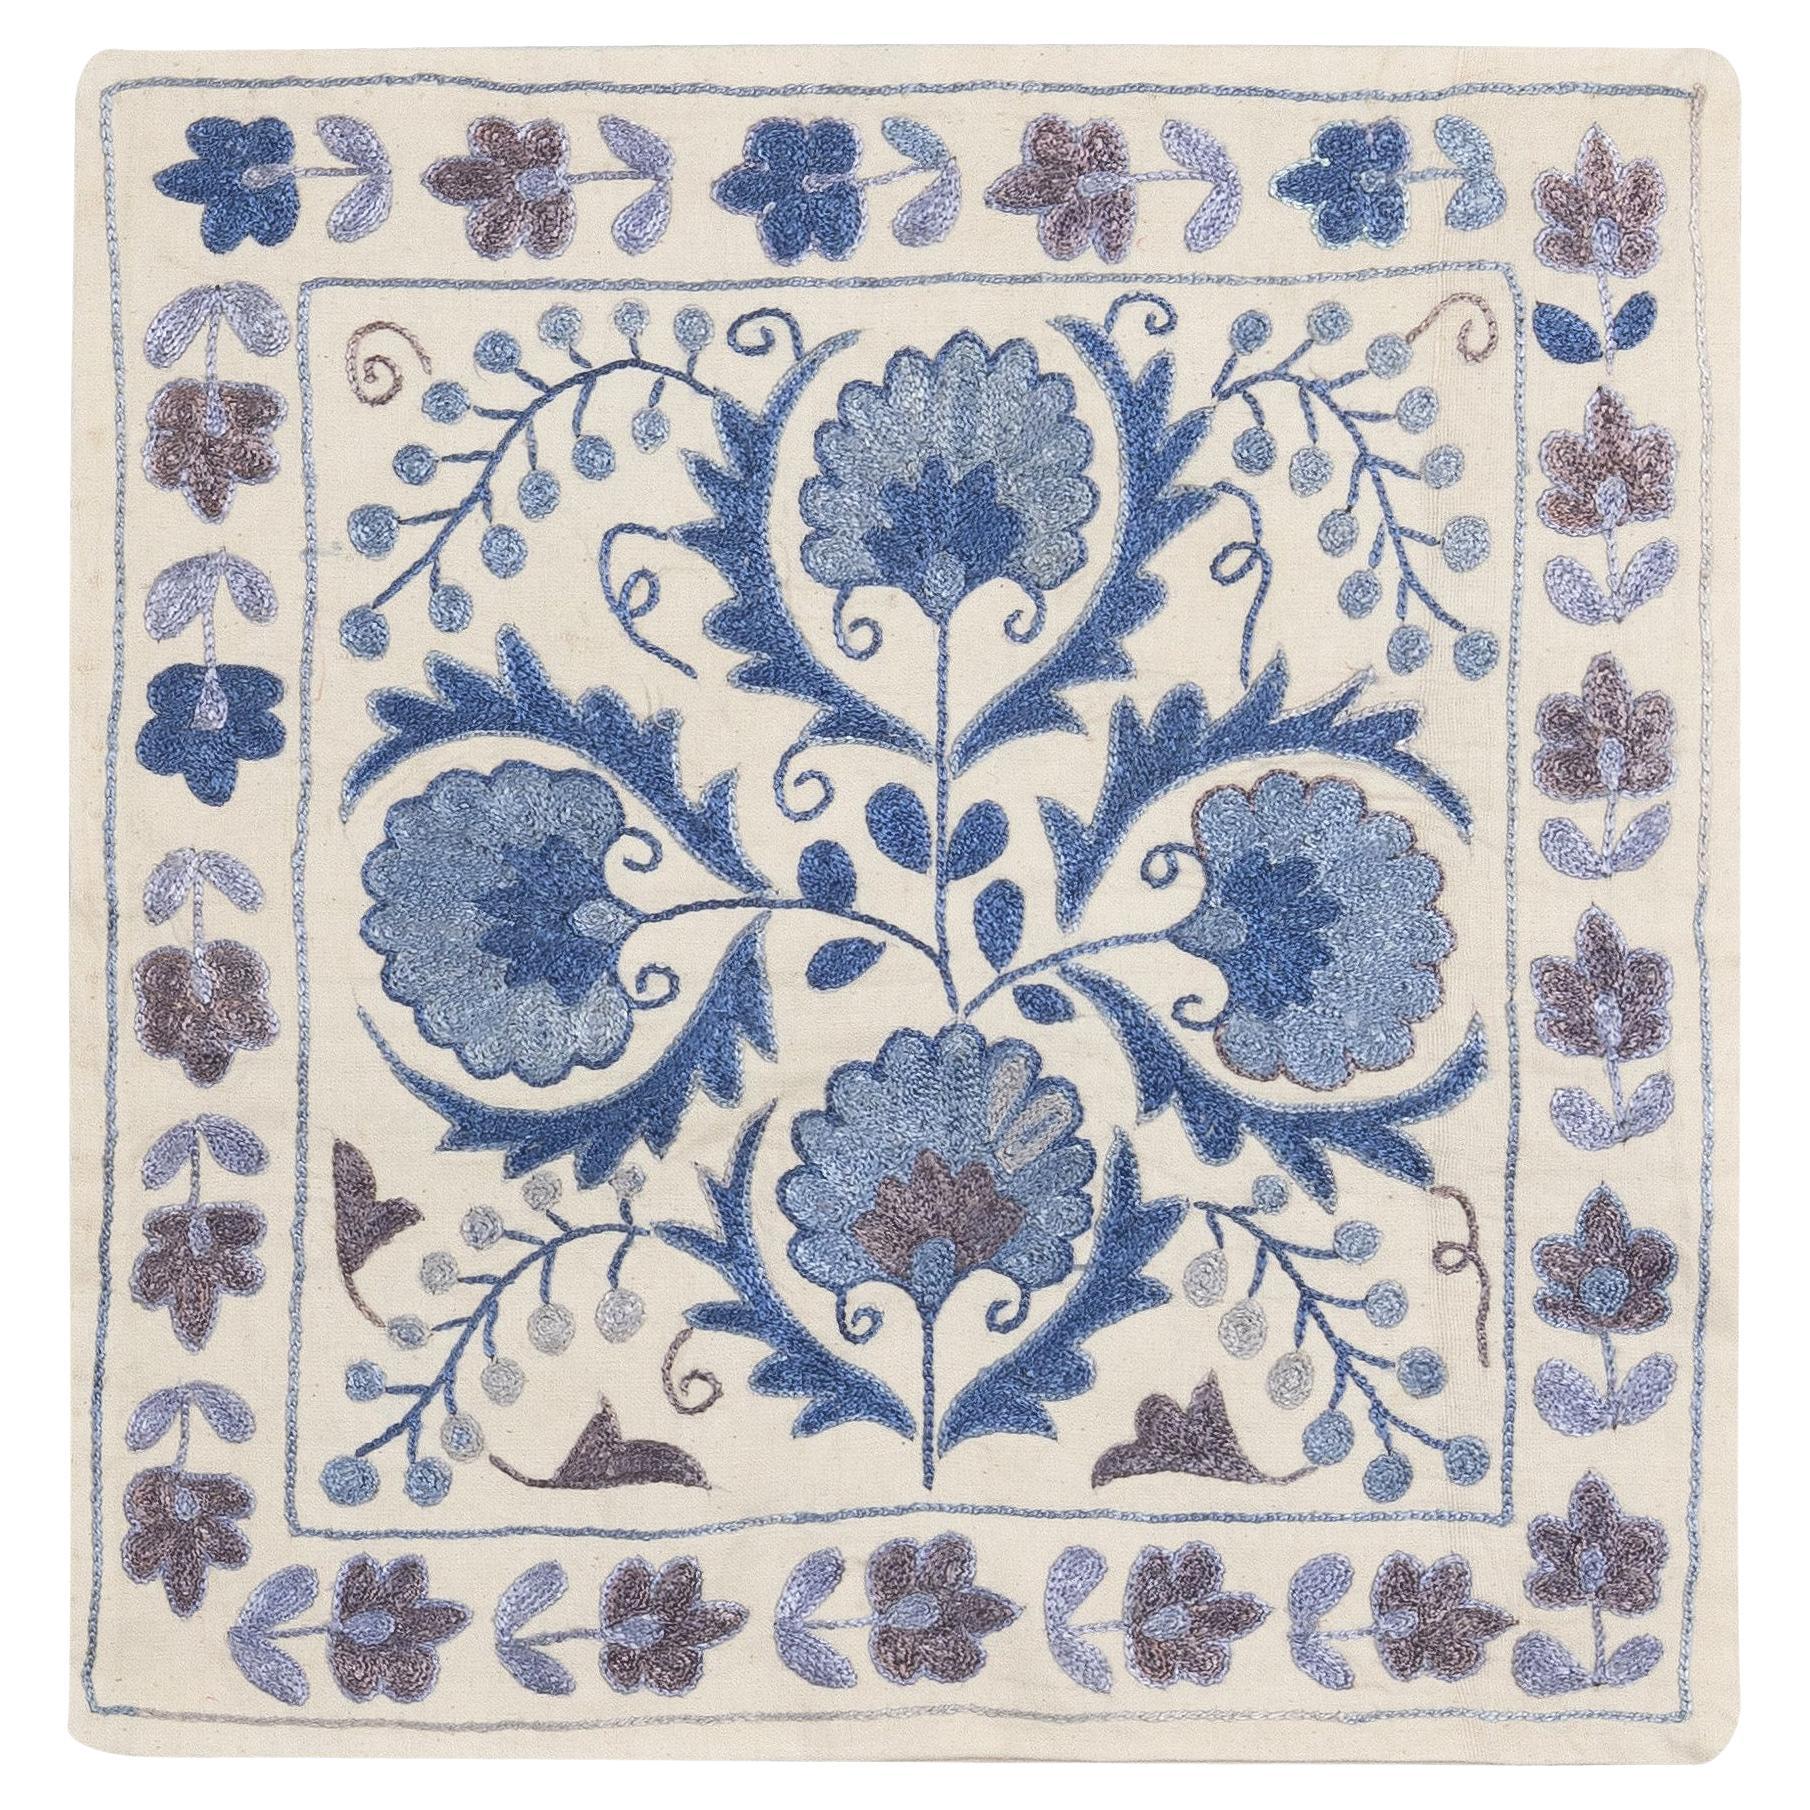 18 "x18" Handmade New Uzbek Silk Embroidered Suzani Cushion Cover in Blue & Cream